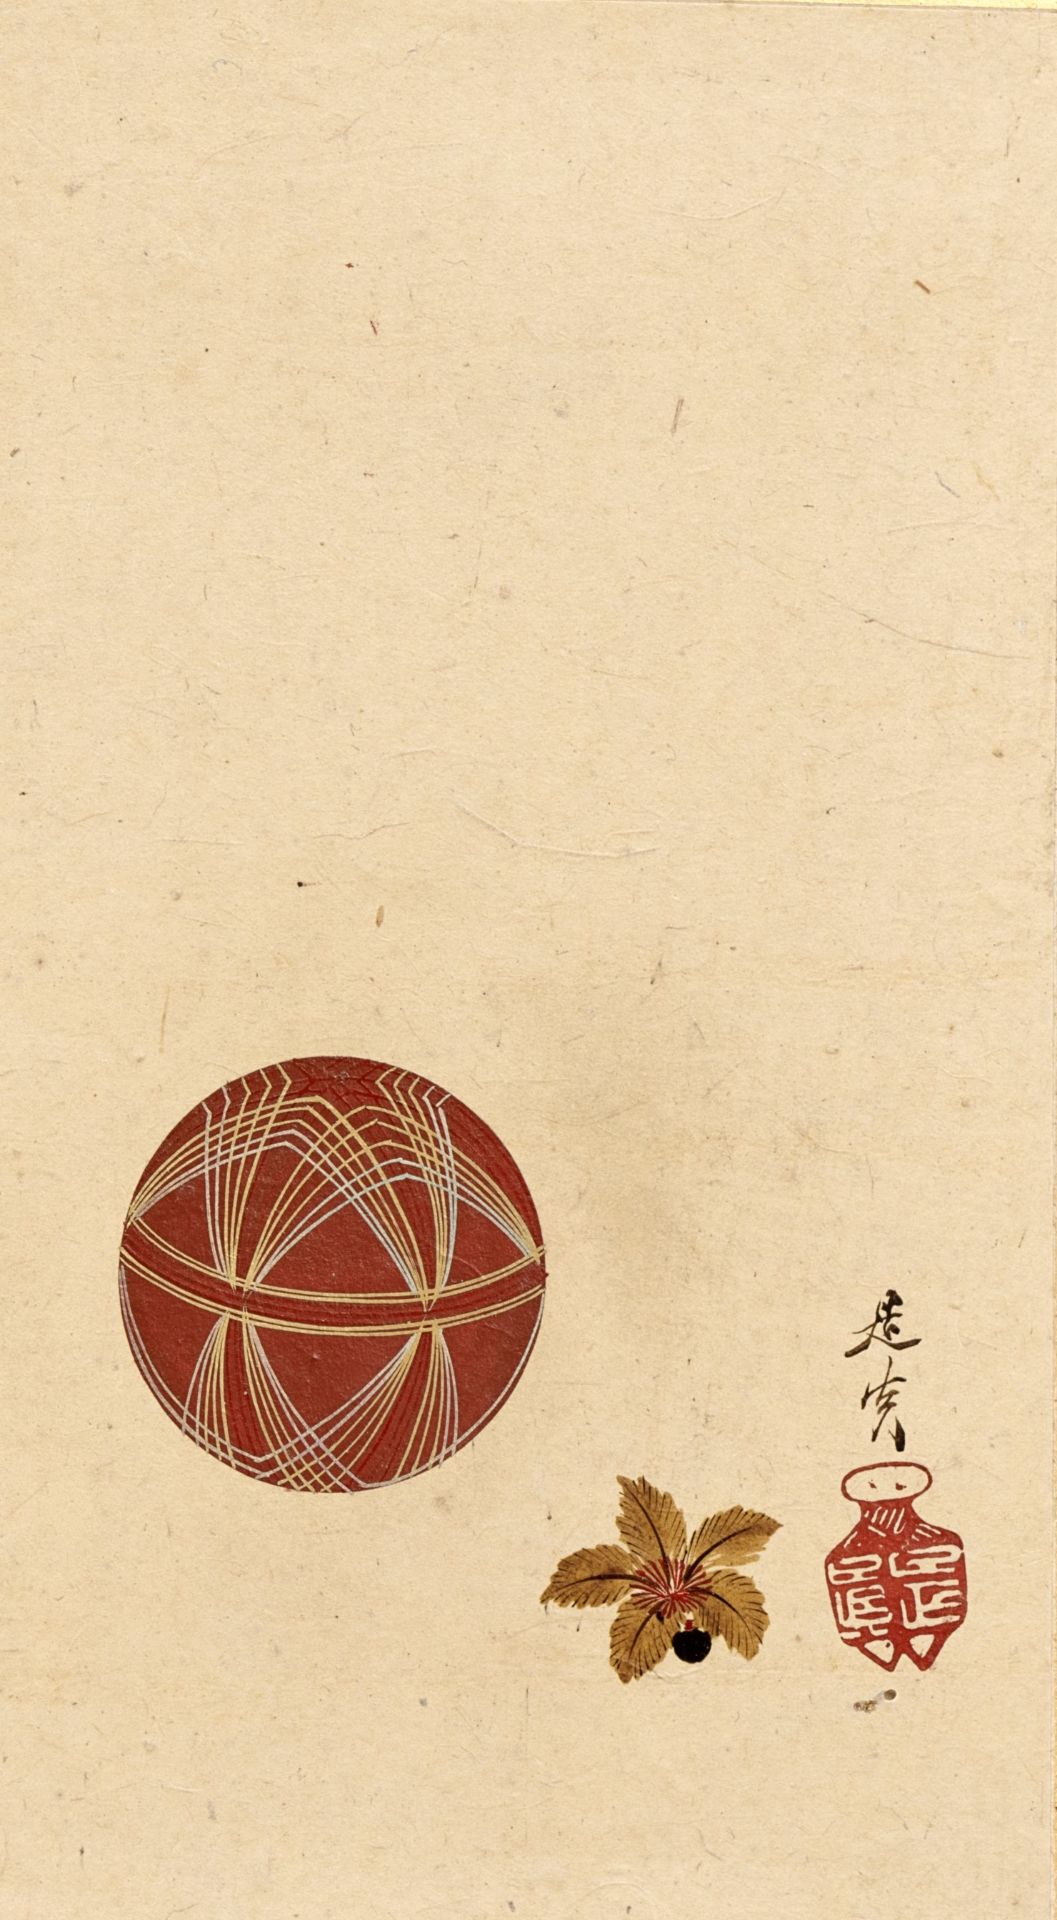 SHIBATA ZESHIN: AN IMPORTANT ALBUM OF FIVE LACQUER PAINTINGS DEPICTING THE GOSEKKU - Image 2 of 29